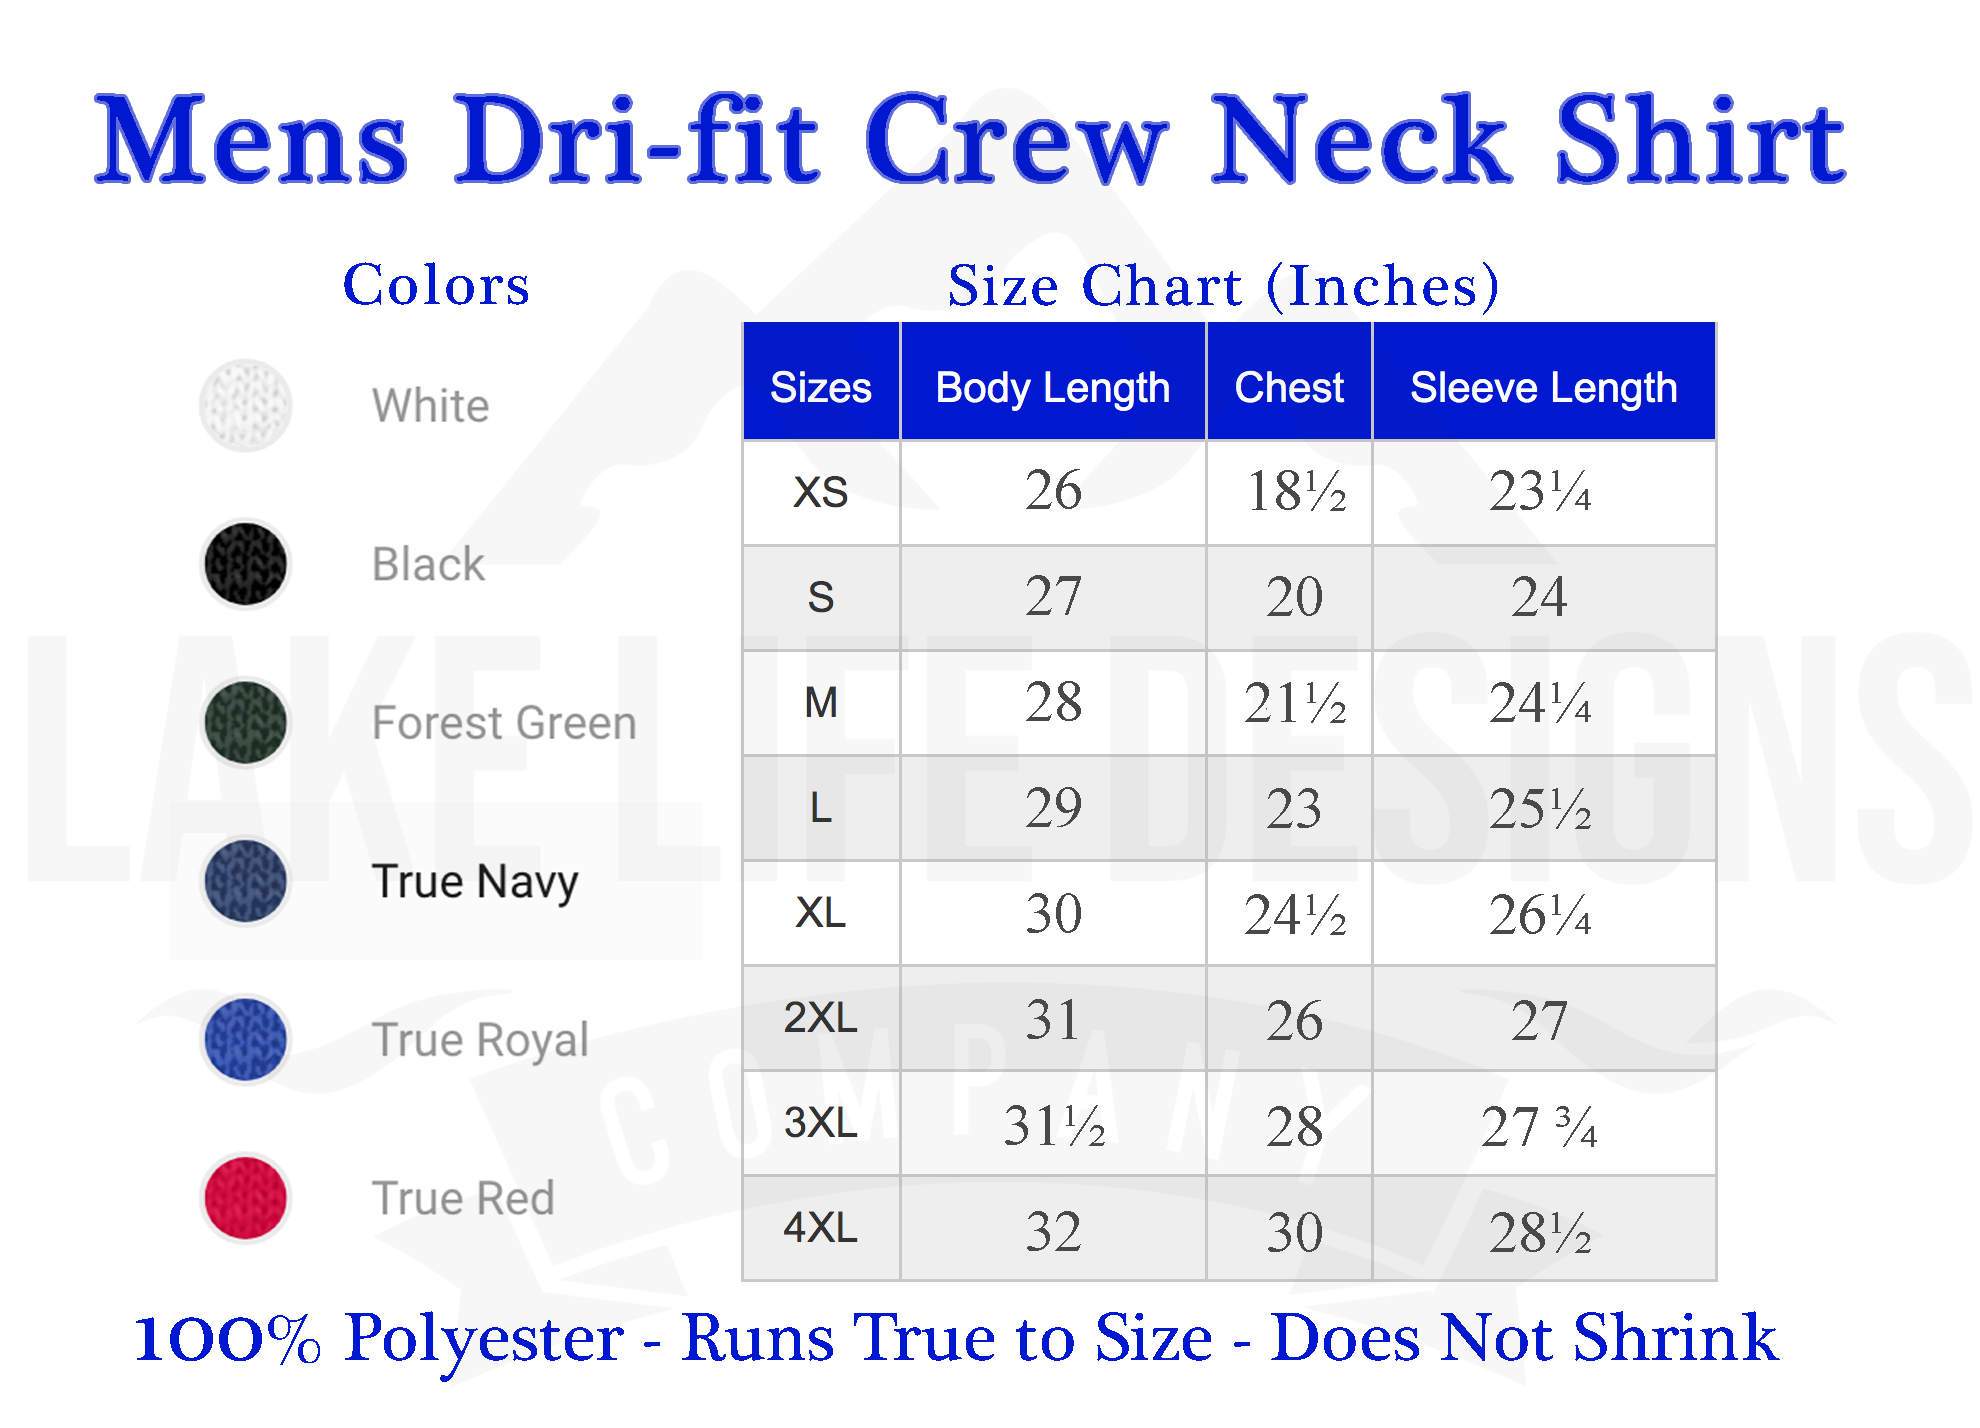 Lure Lake Life Dri-fit Boating Shirt - Breathable Material- Men's Long Sleeve Moisture Wicking Tee - North Carolina Lake